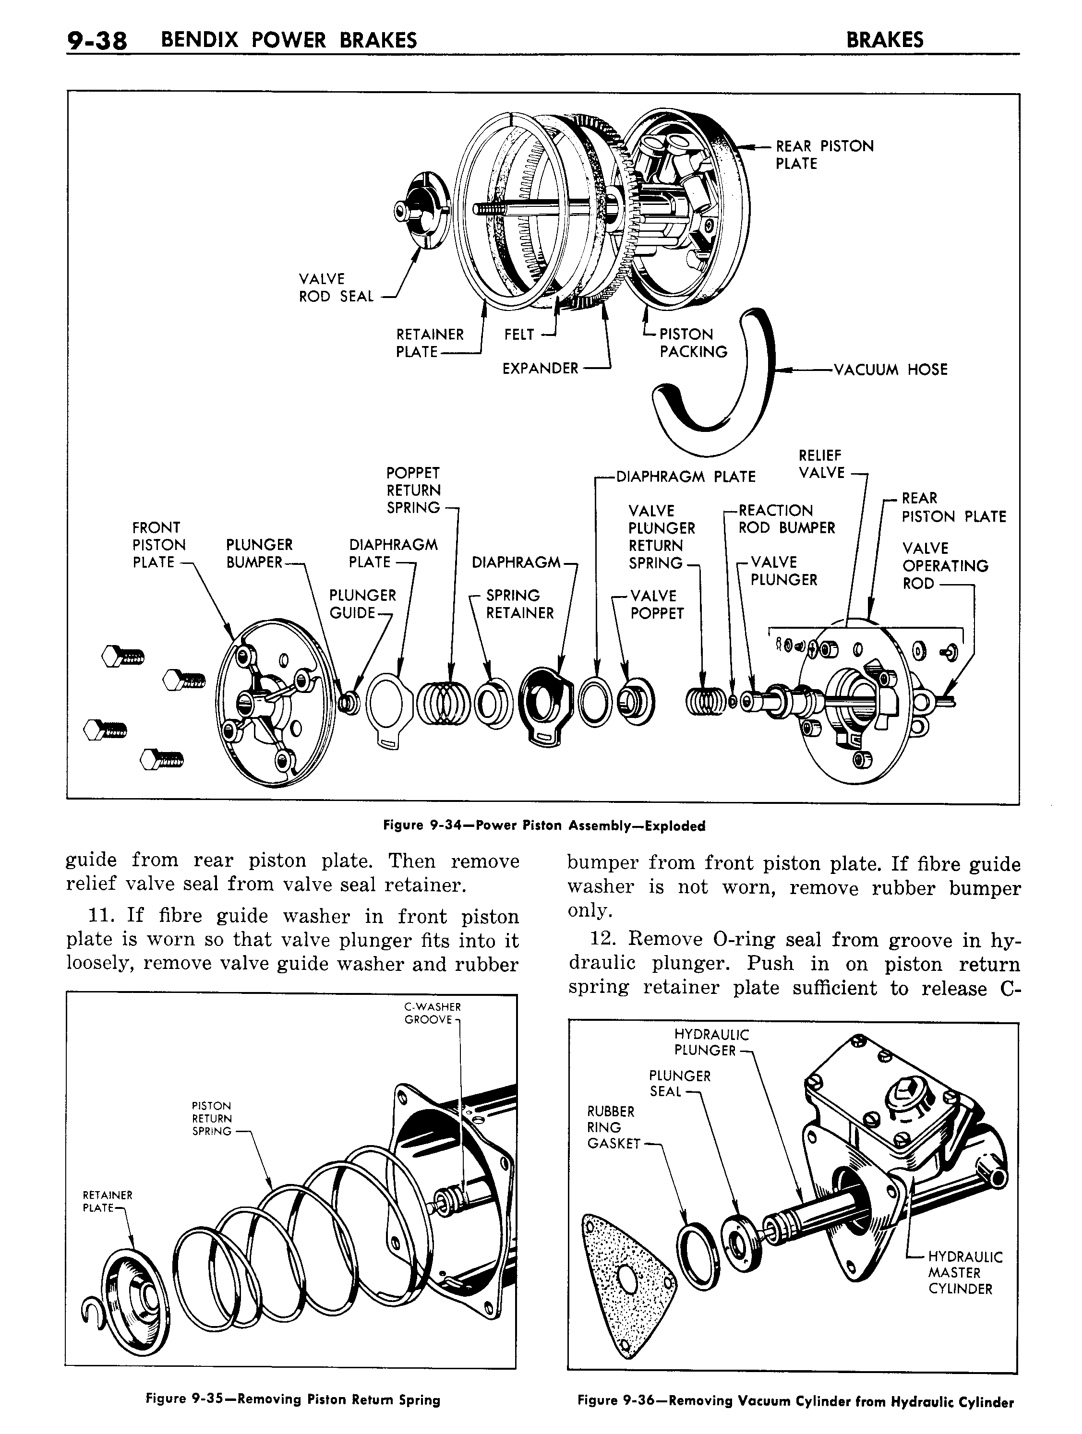 n_10 1957 Buick Shop Manual - Brakes-038-038.jpg